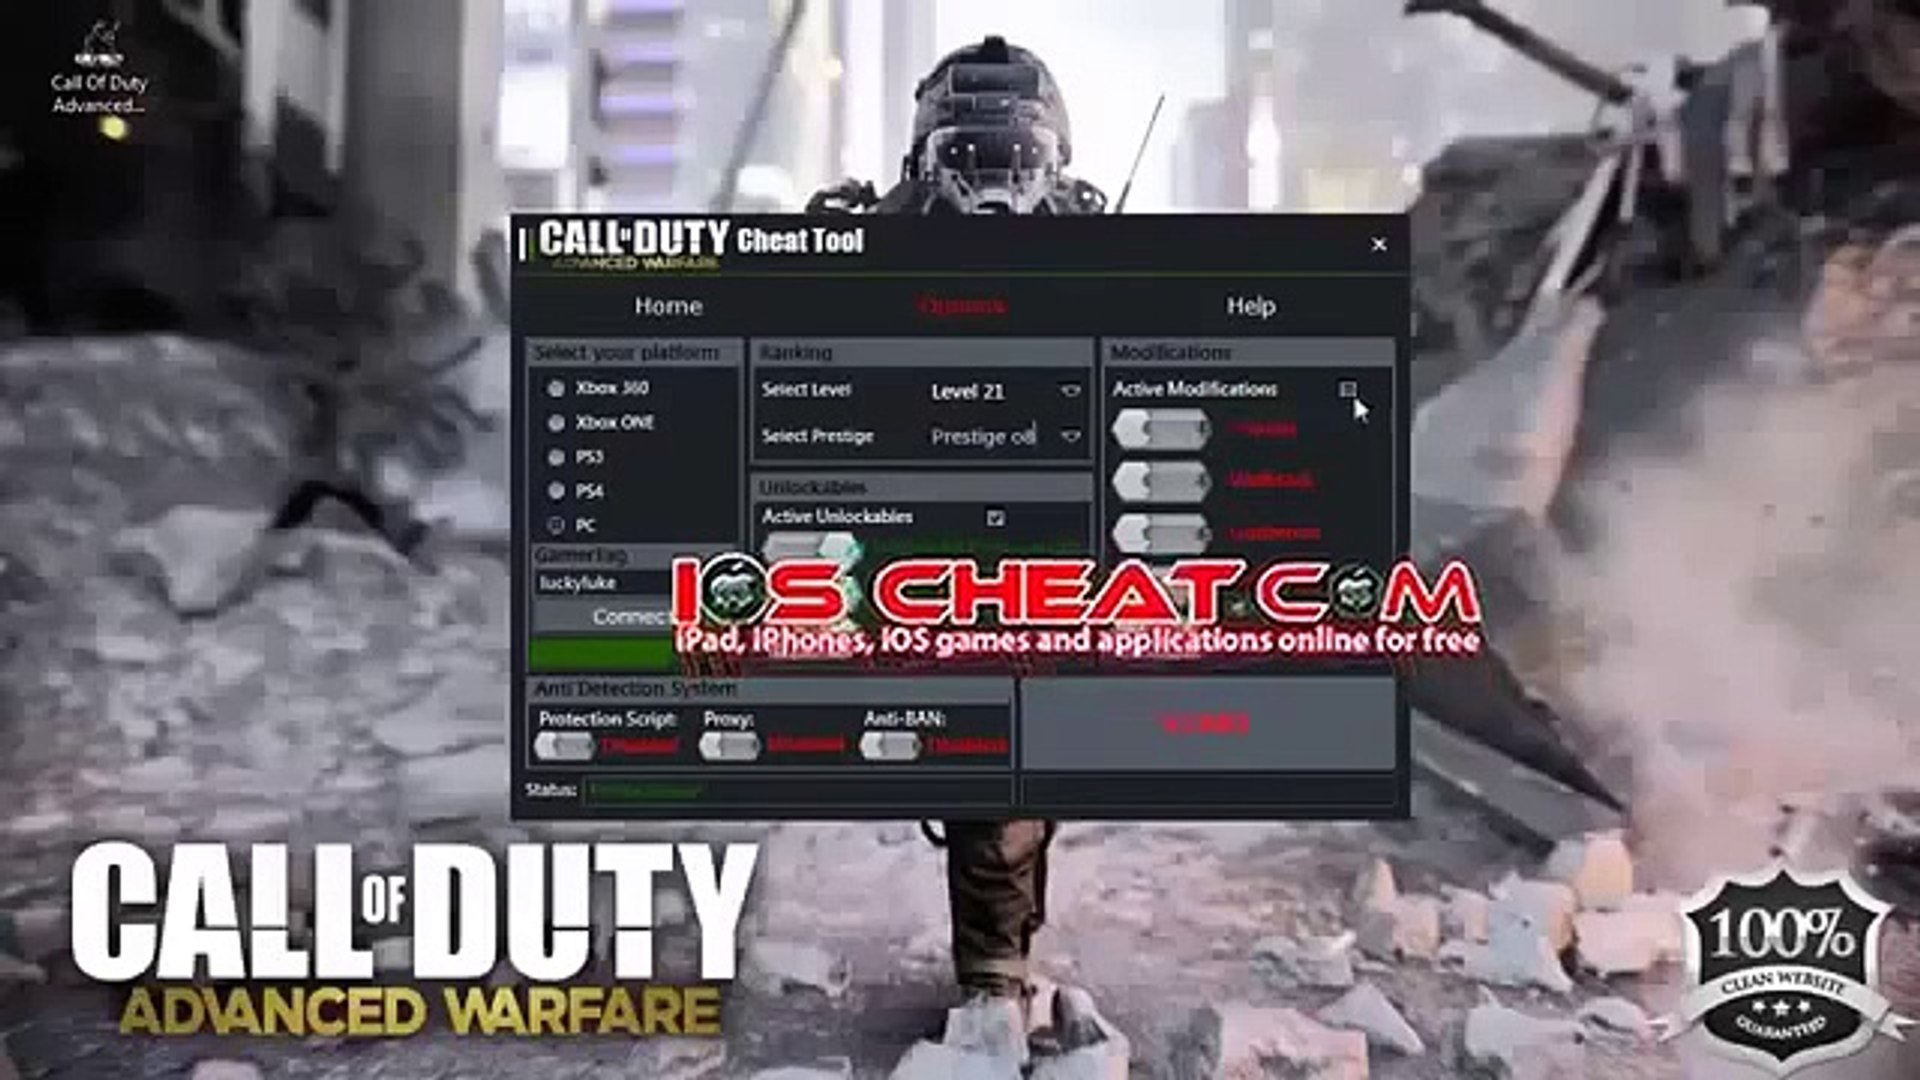 Call Of Duty Advanced Warfare Hack Tool March 2015 Aimbot Cod Prestige Hack - 